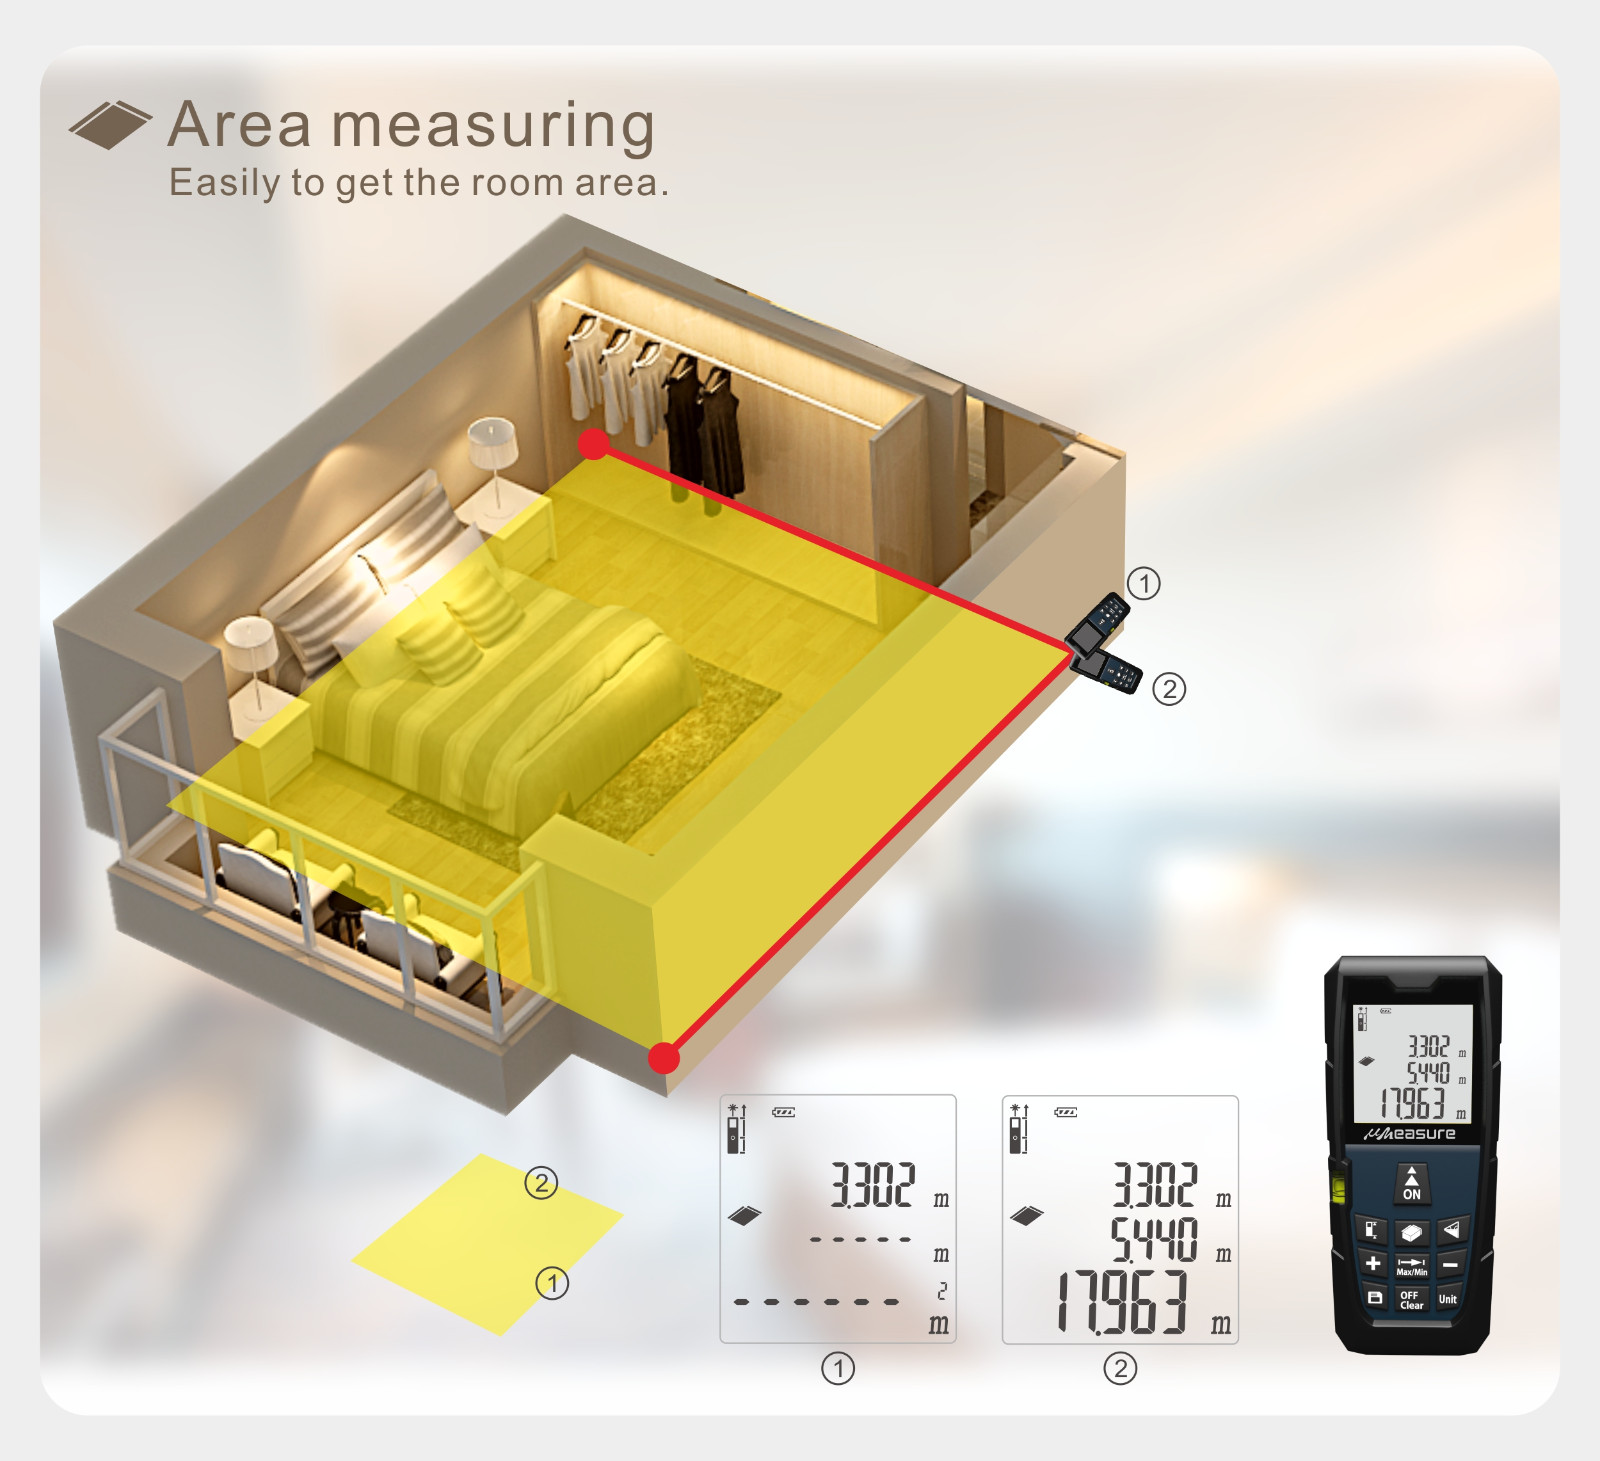 UMeasure durable laser distance measurer reviews one button for measuring-8